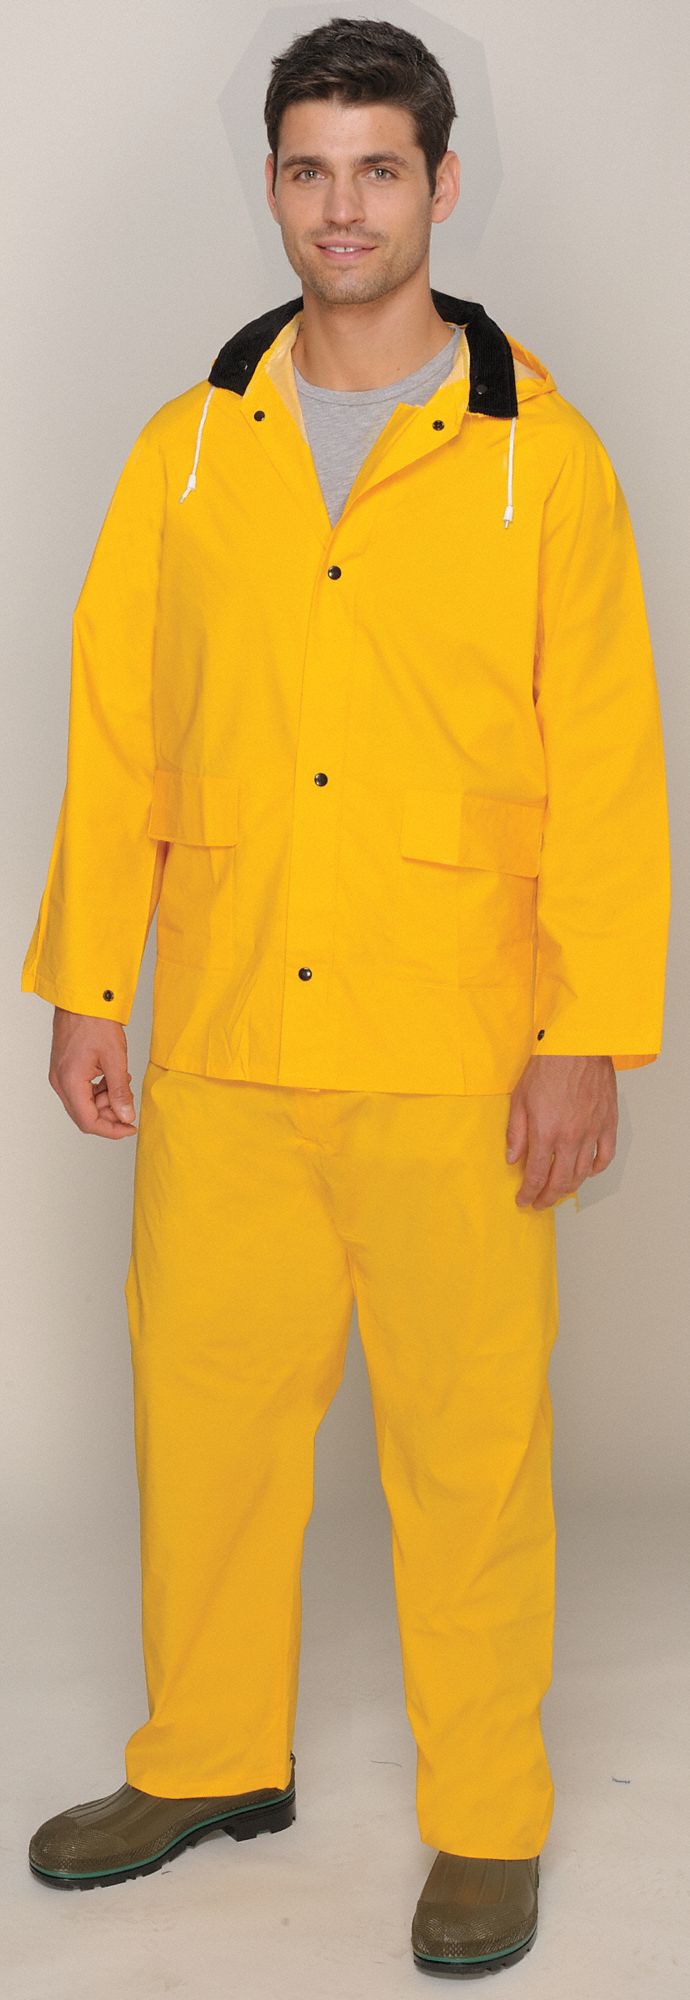 MIK 35100-XXXL Rain Suit,Jacket/Bib,Unrated,Yellow,3XL 60405966066 | eBay